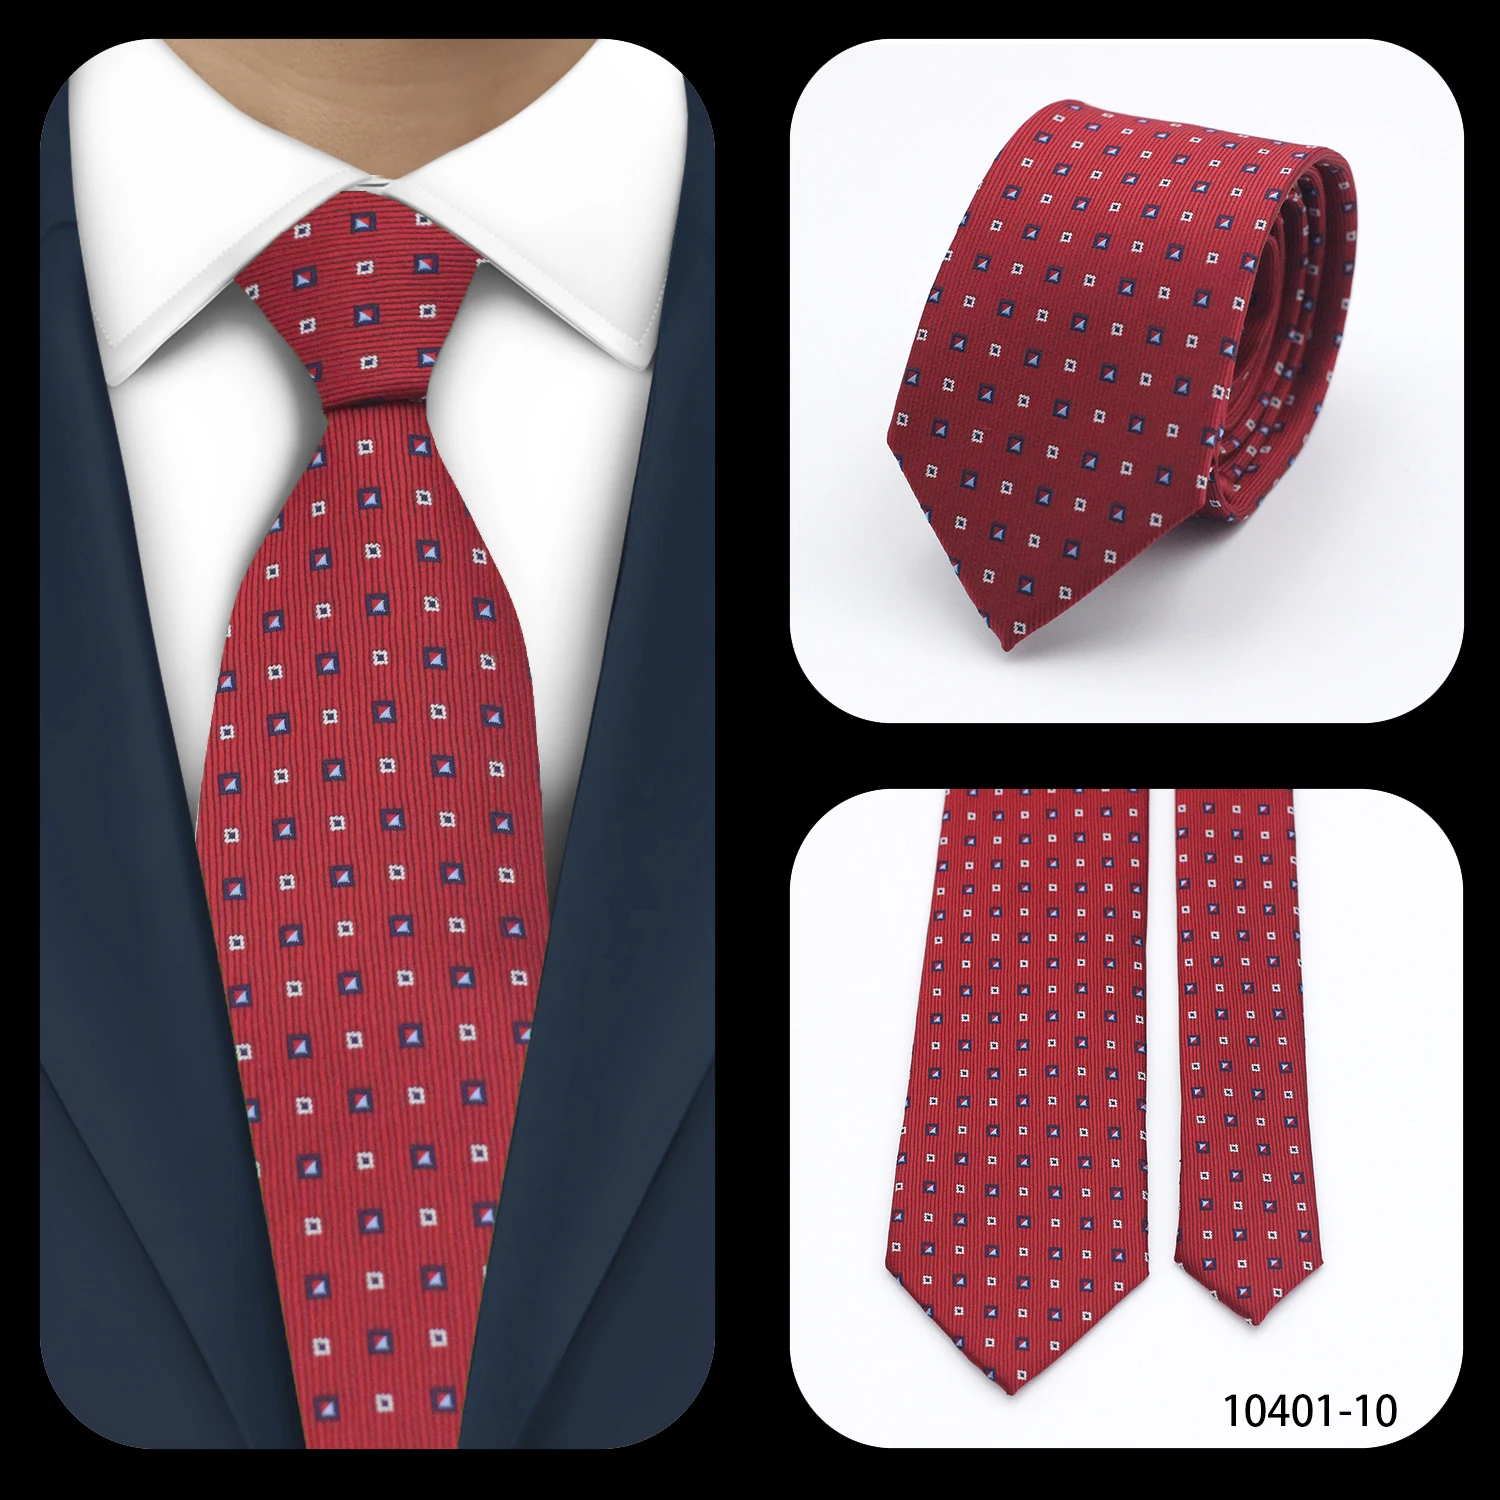 

LYL 7Cm Gentleman Anime Men's Ties Suit Accessories for Men Red Business Tie Fashion Neckties With Print Elegant Gift Wedding